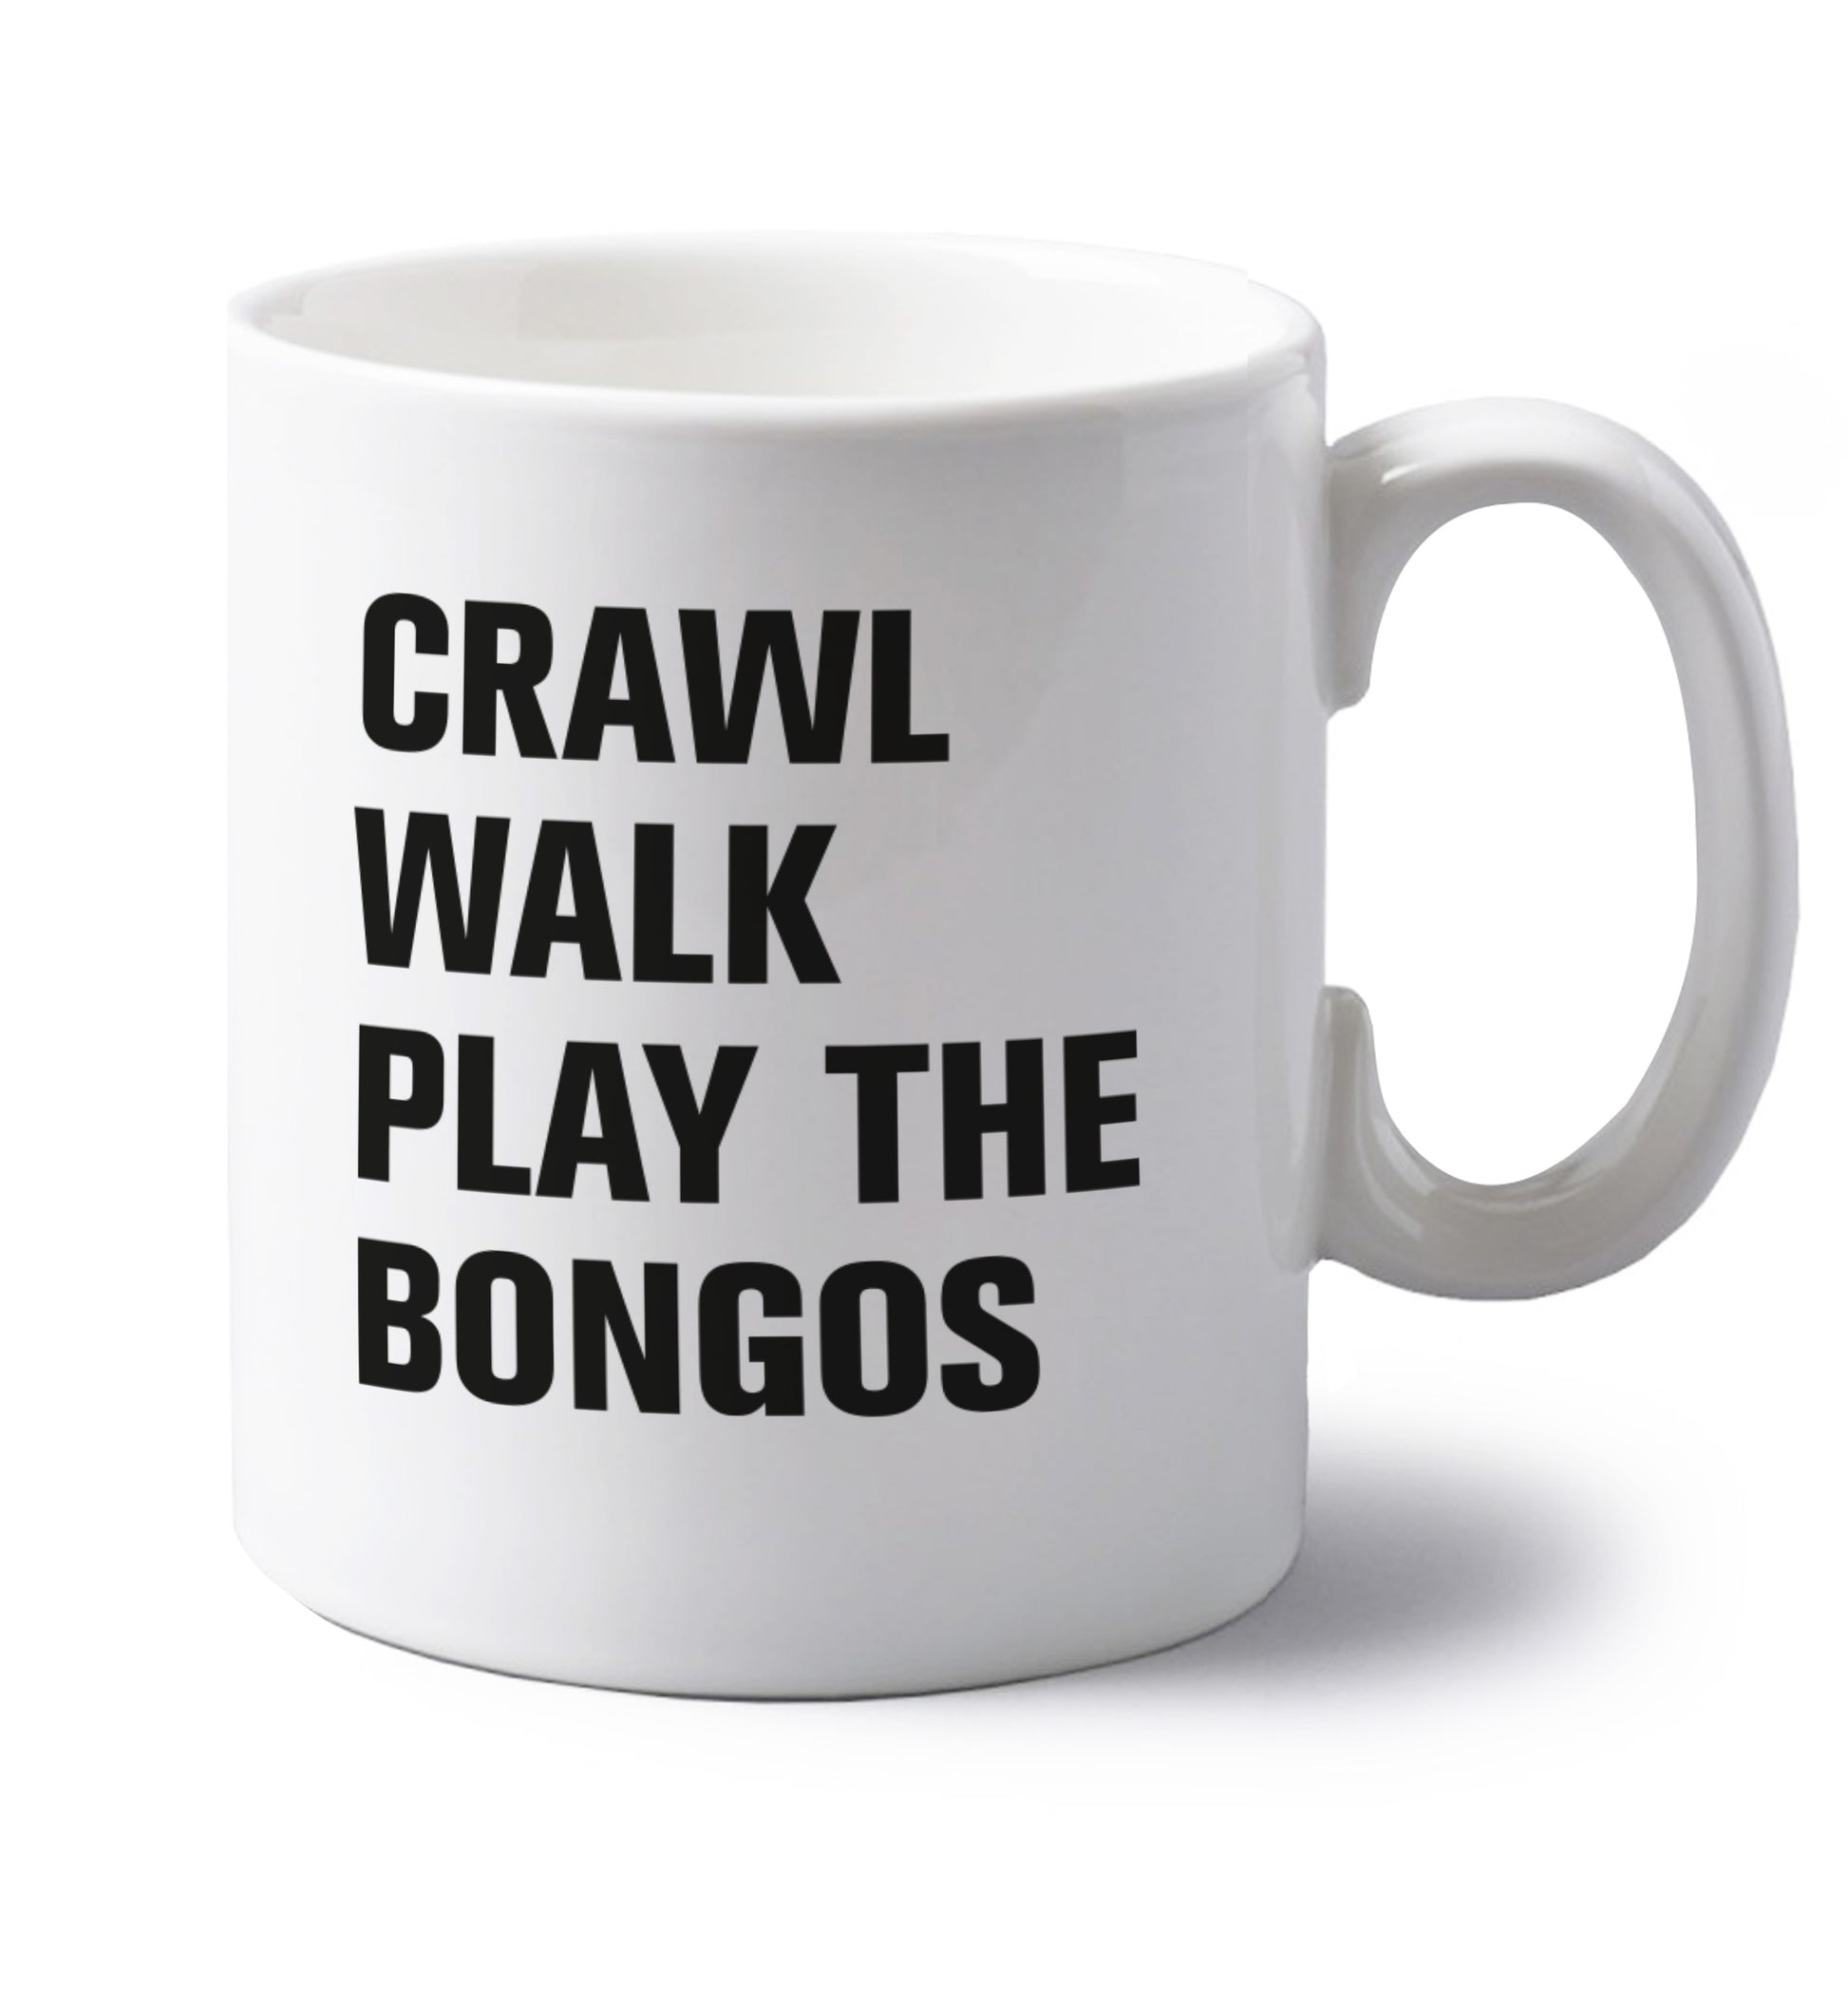 Crawl Walk Play Bongos left handed white ceramic mug 